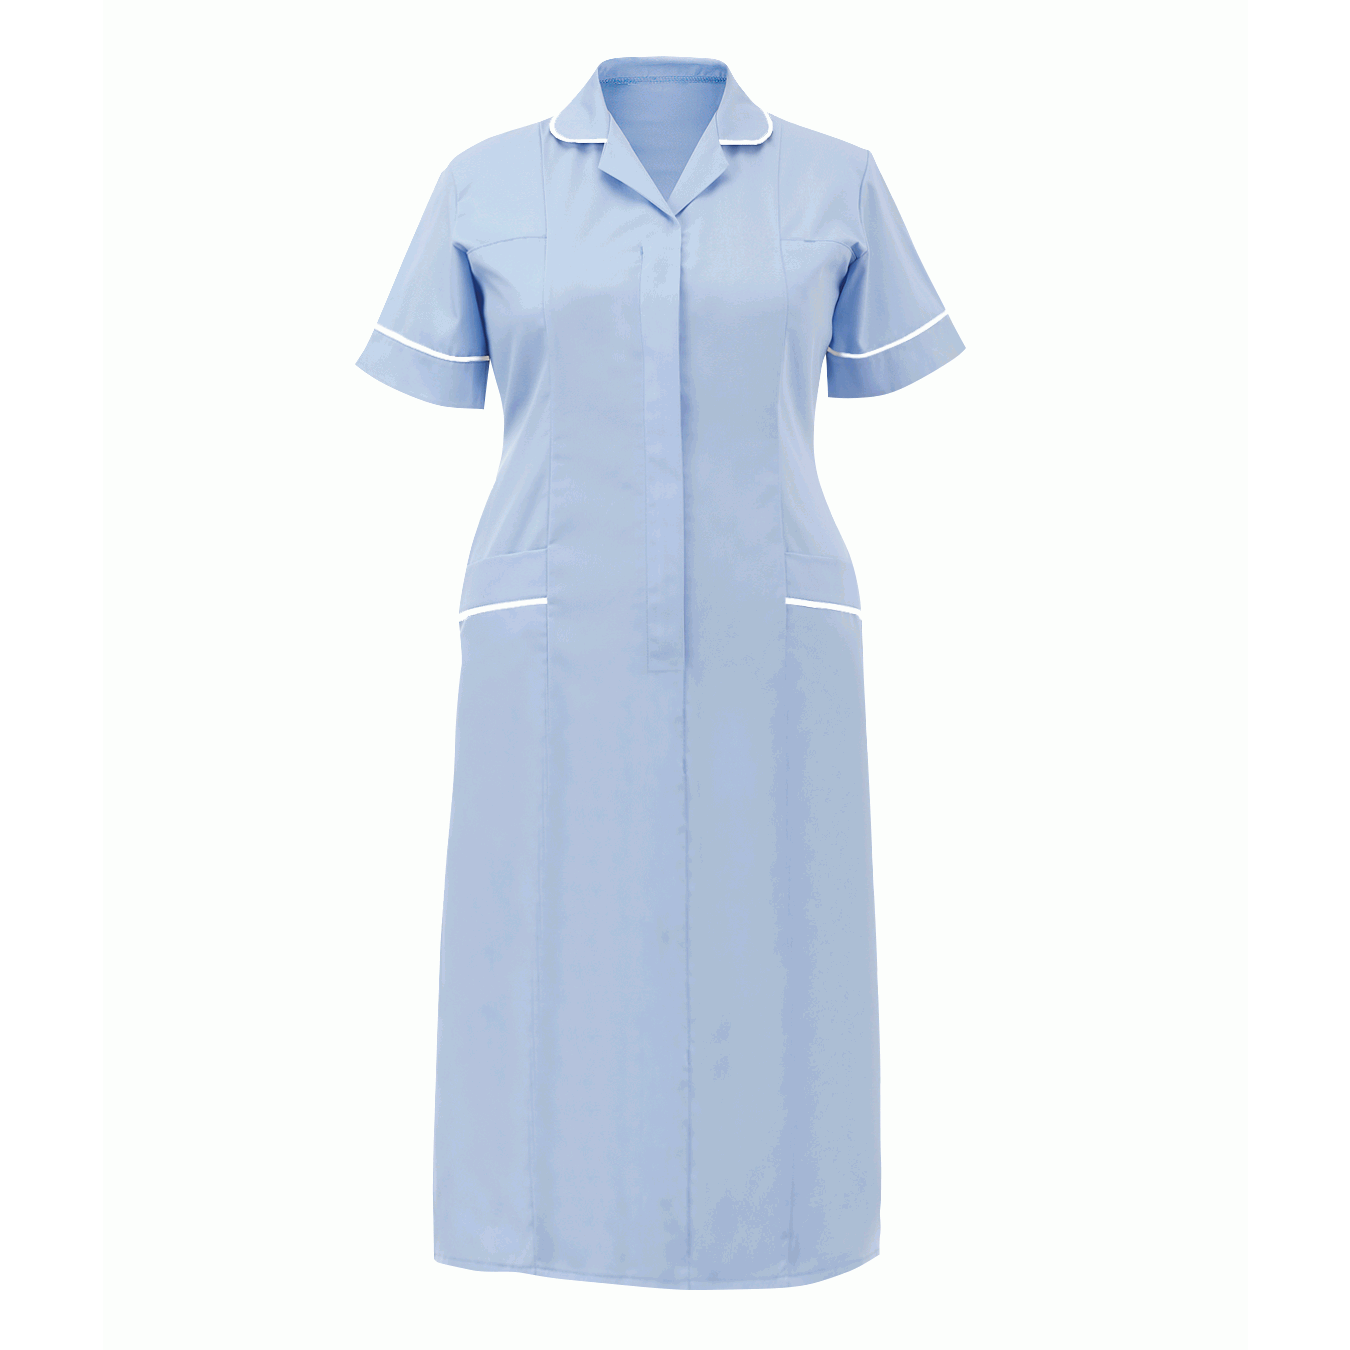 CLASSIC STEPIN DRESS: LADIES - HOSPITAL BLUE